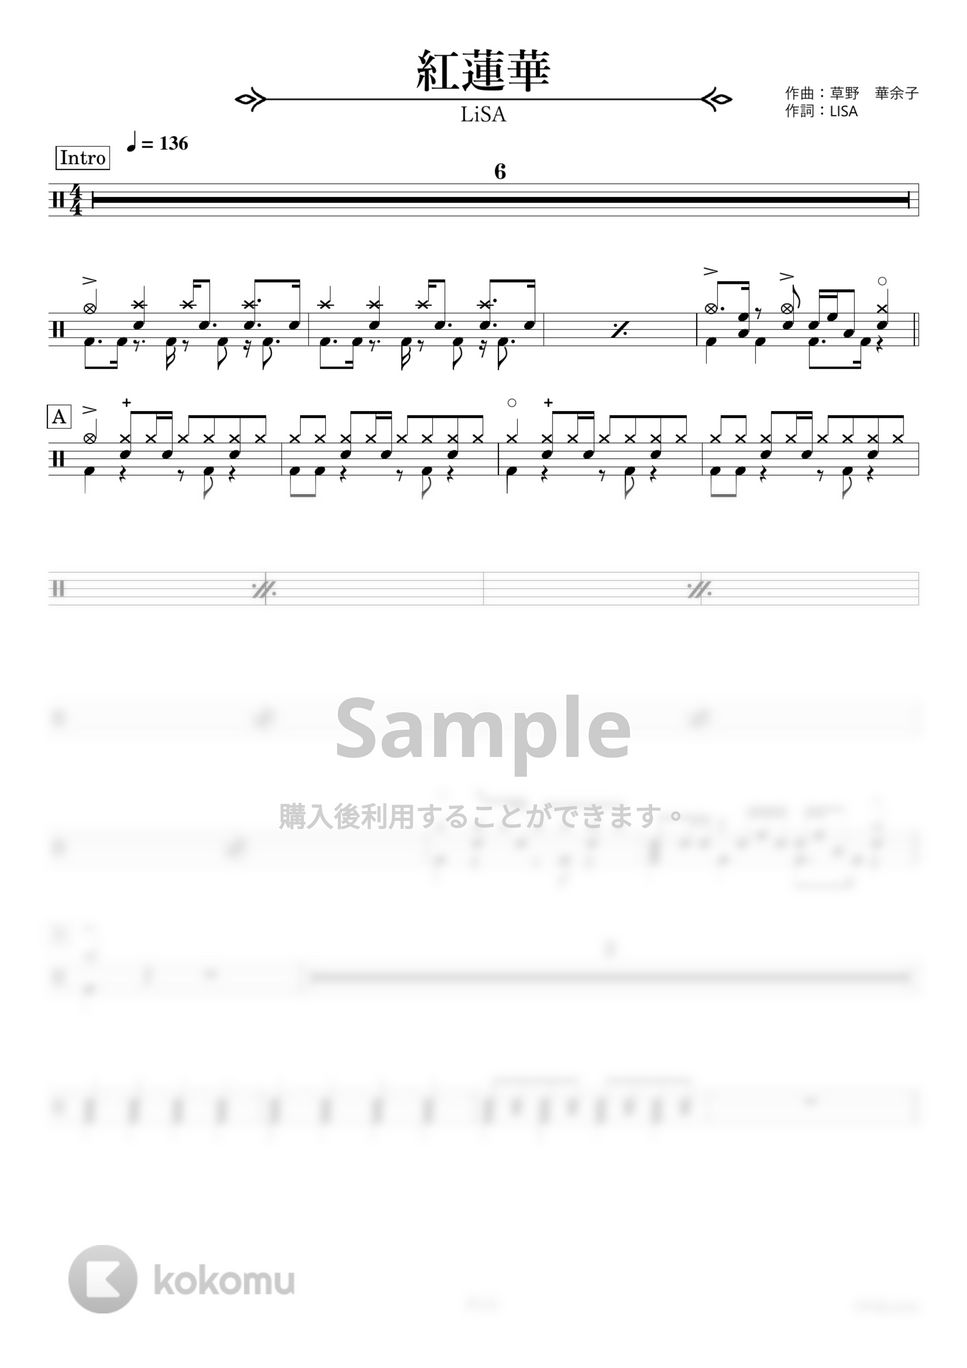 LiSA - 紅蓮華【ドラム楽譜】 by HYdrums